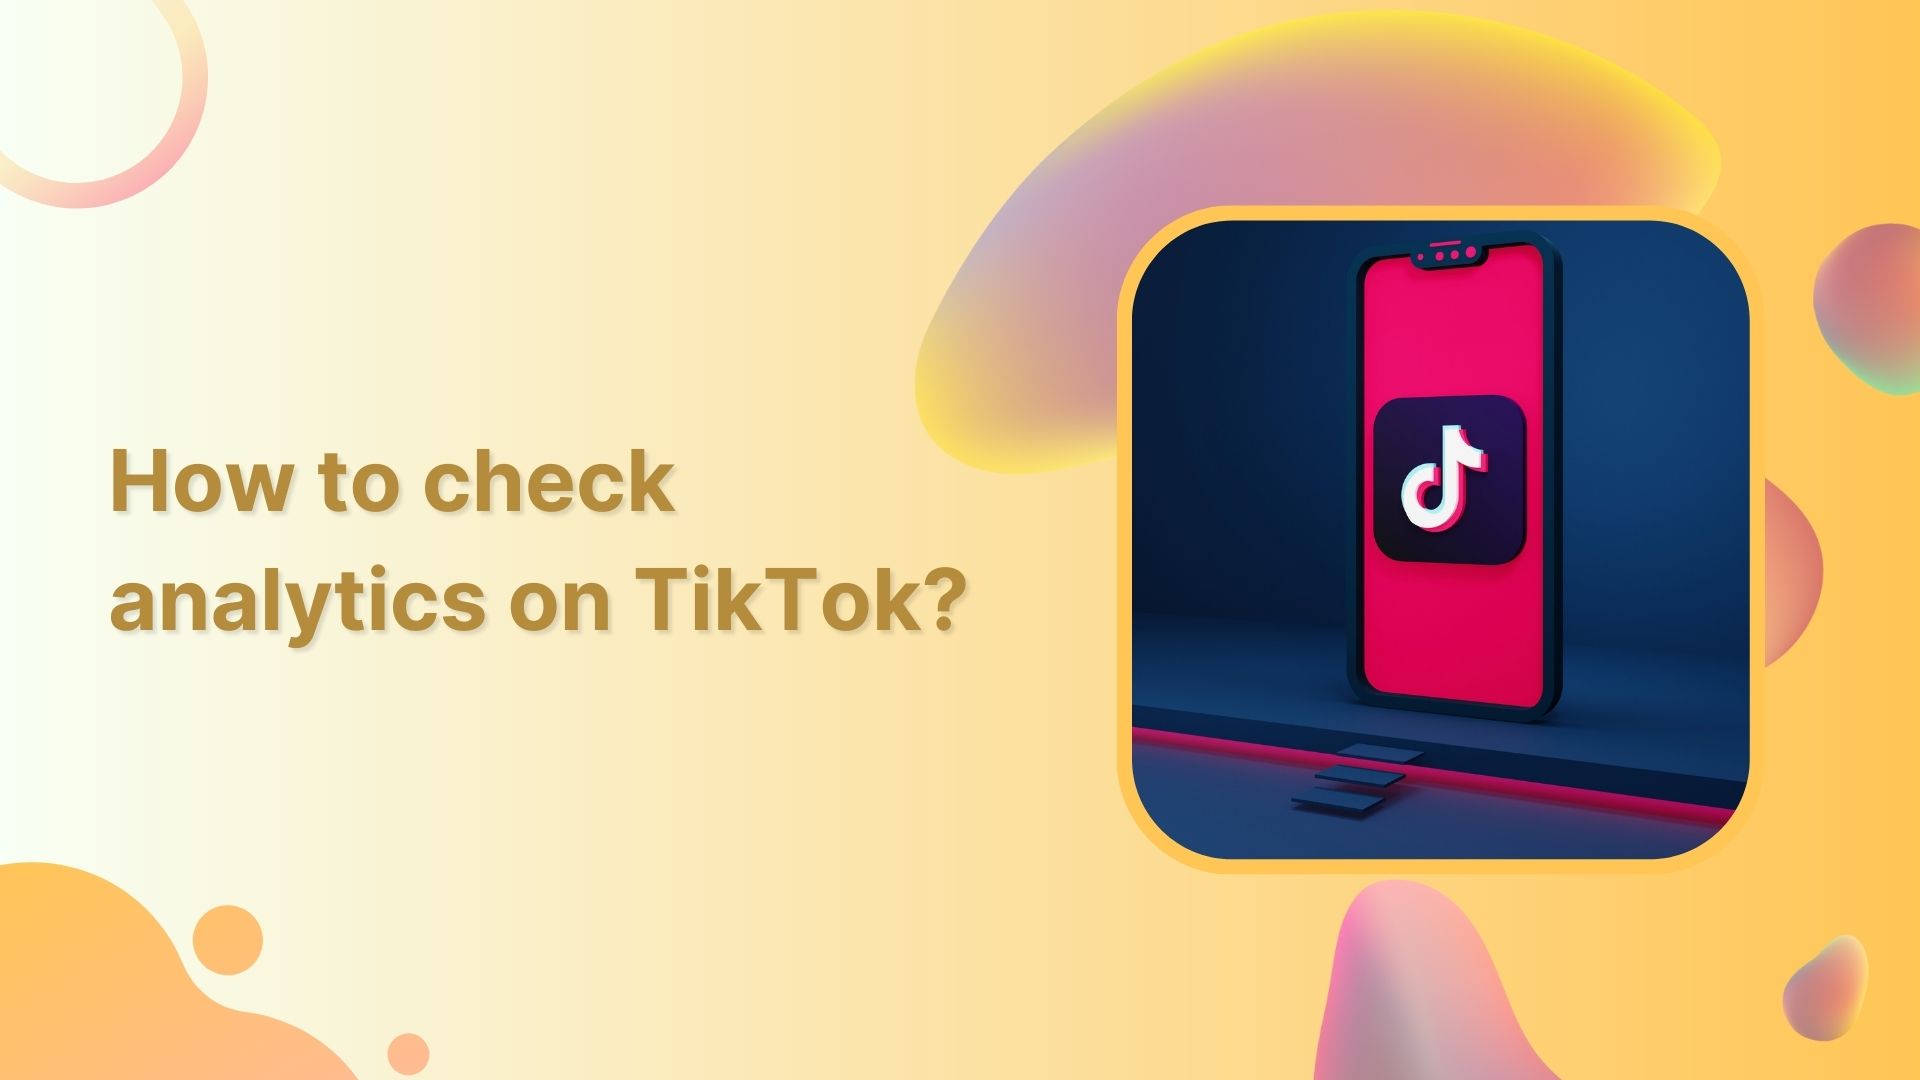 How to check analytics on TikTok?